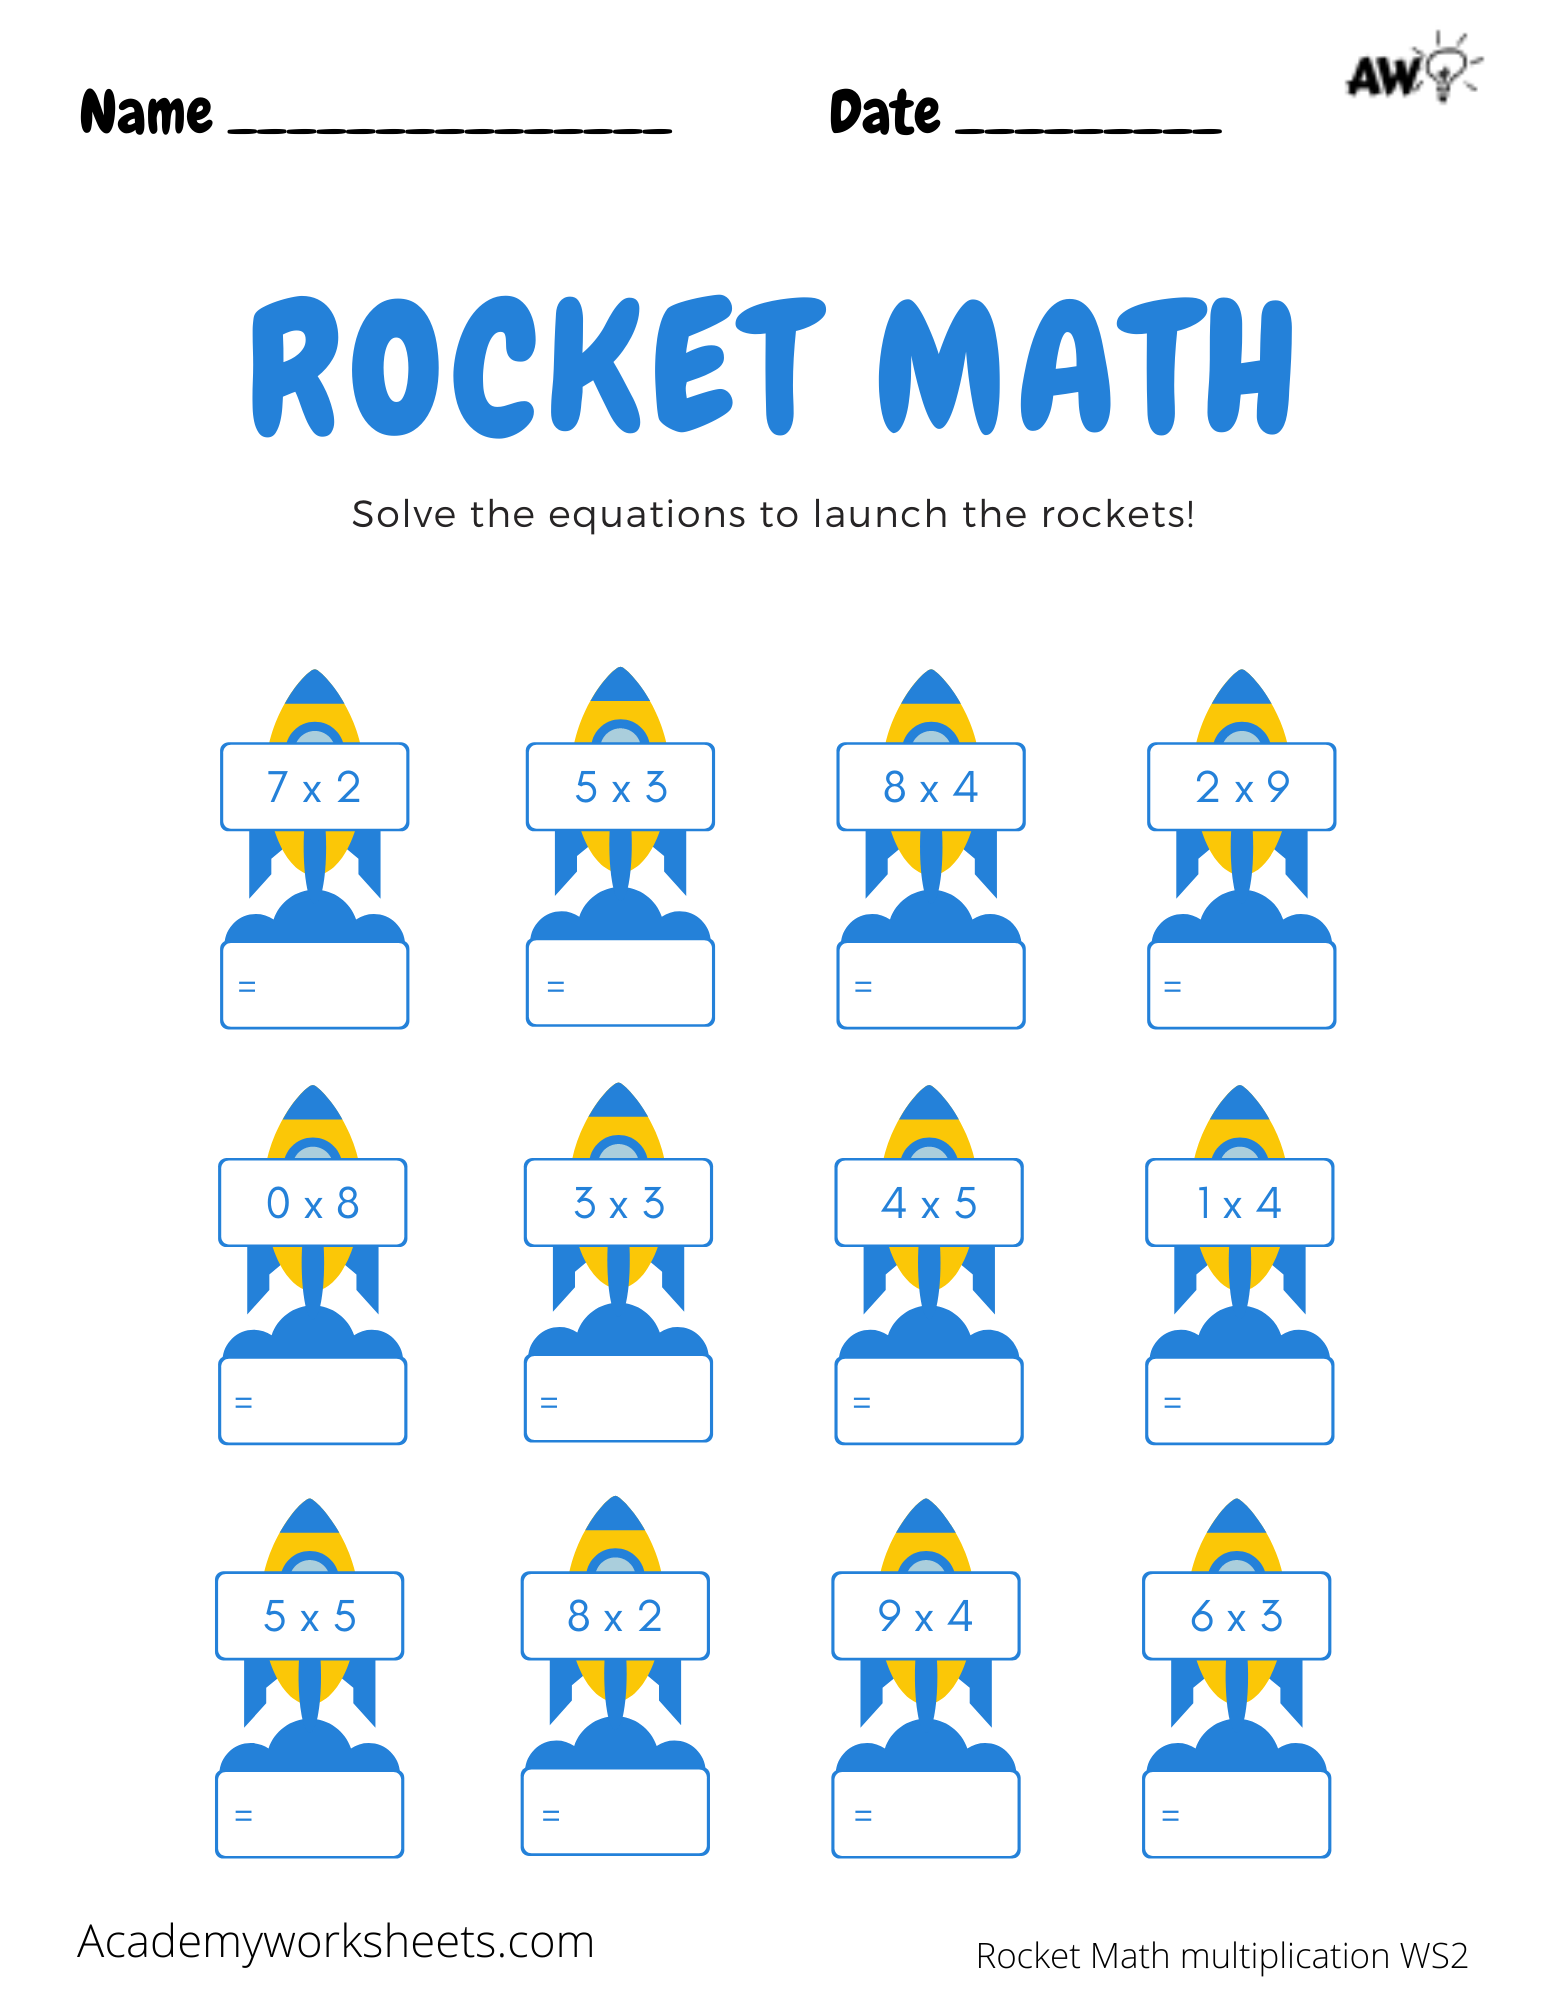 rocket math multiplication academy worksheets